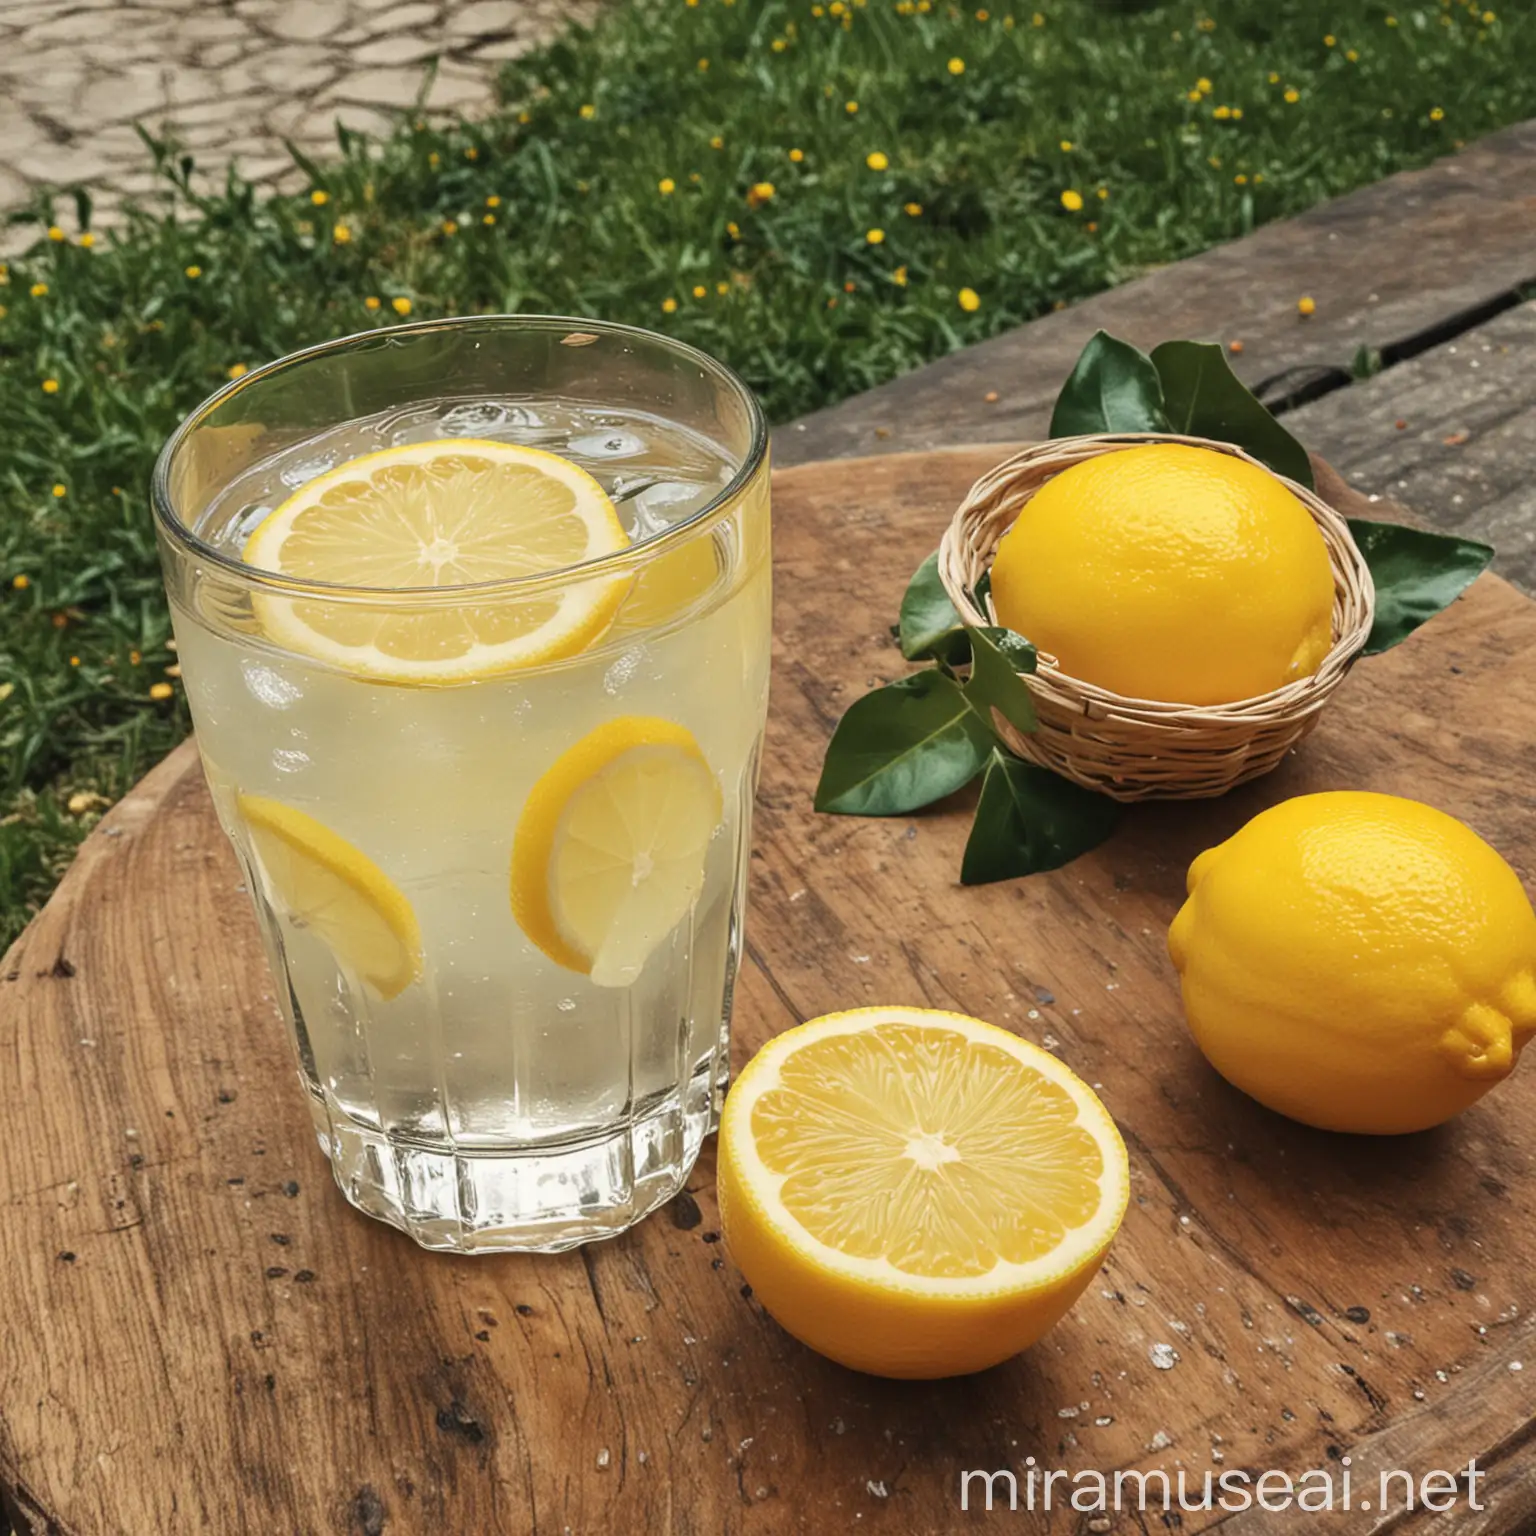 Refreshing Lemon Juice on a Sunny Summer Day